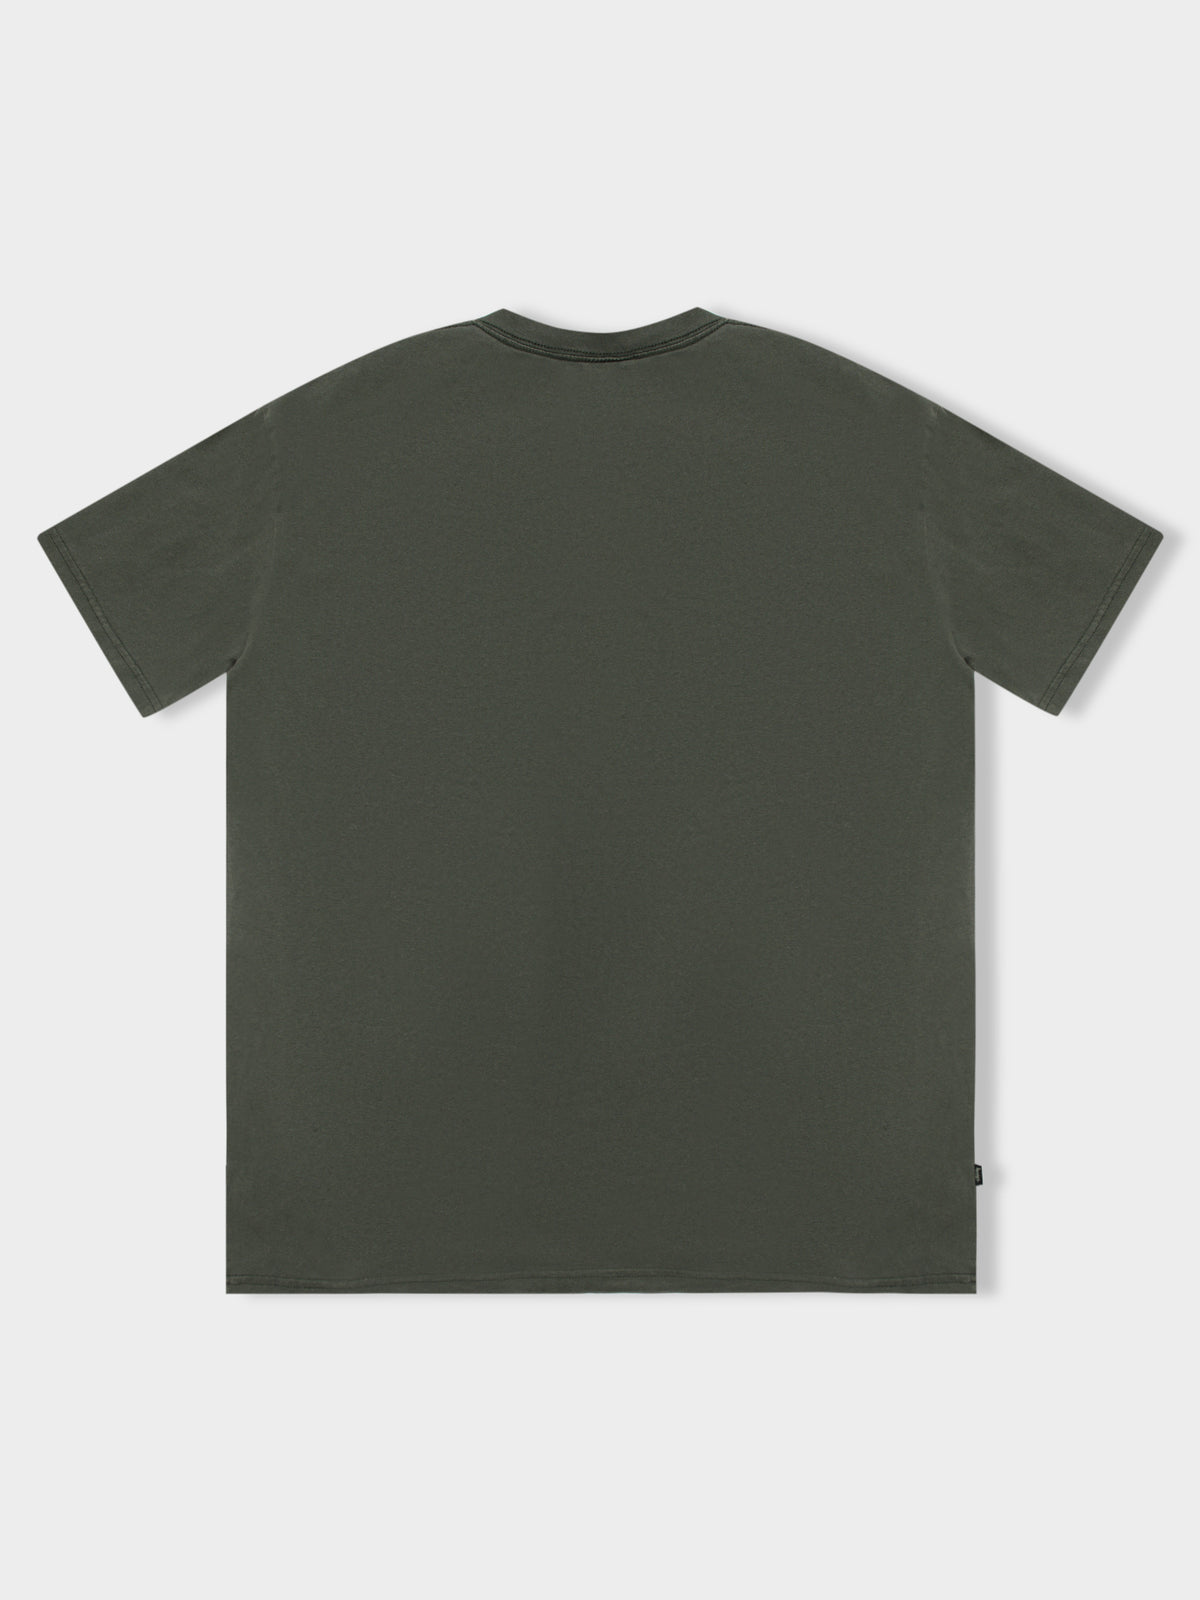 Shadow Stock T-Shirt in Dark Green